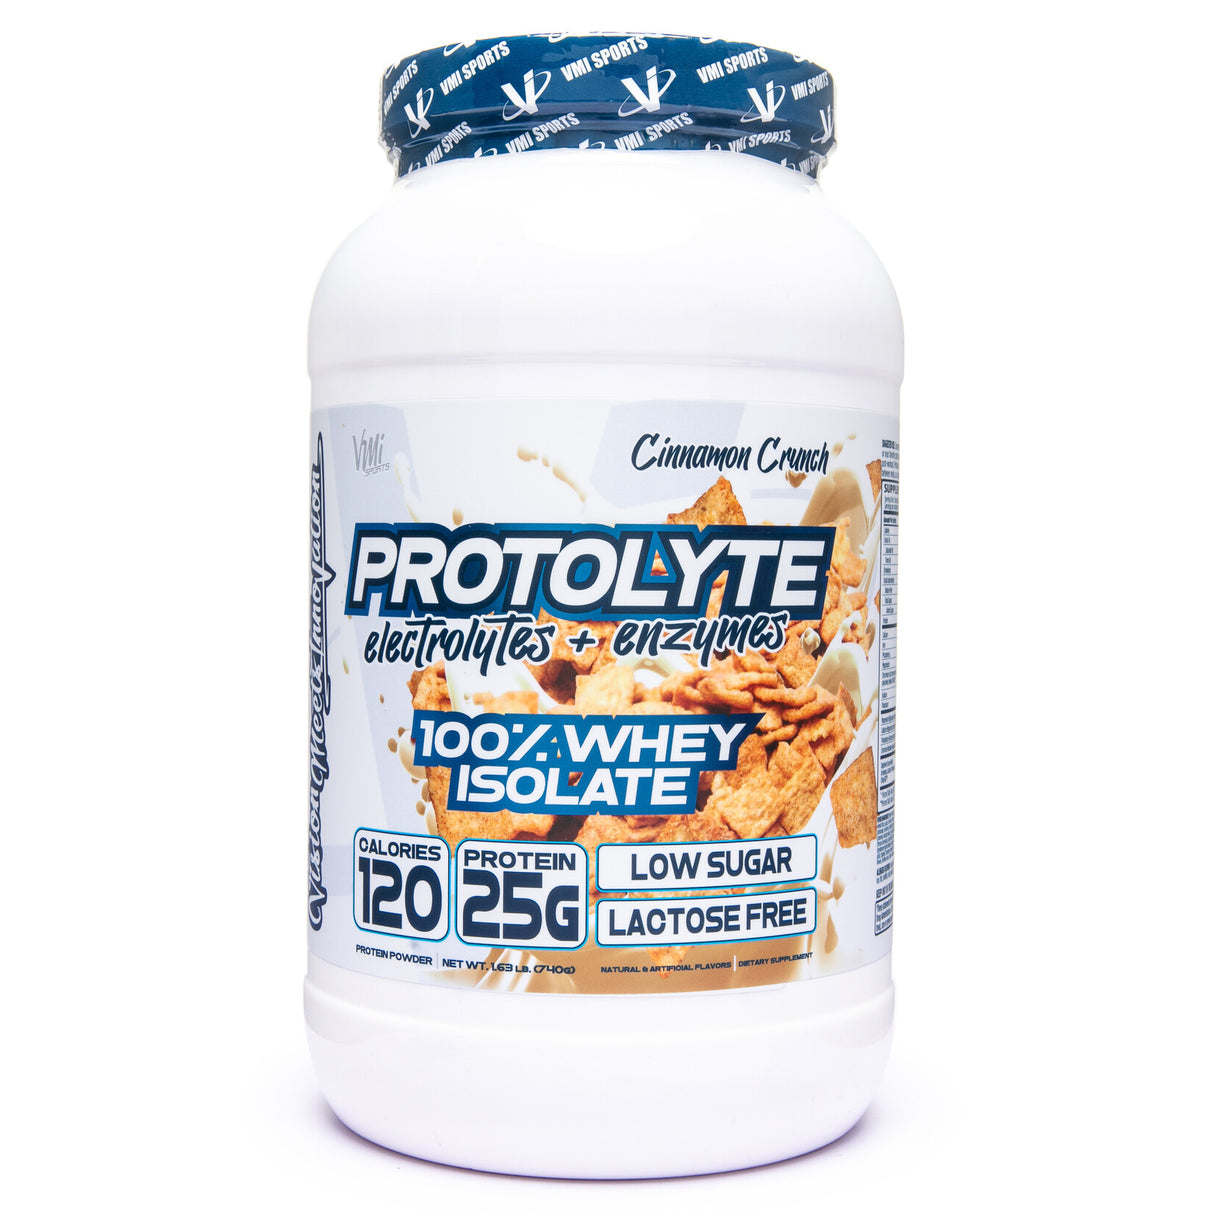 Protolyte Whey Isolate Protein - VMI Sports